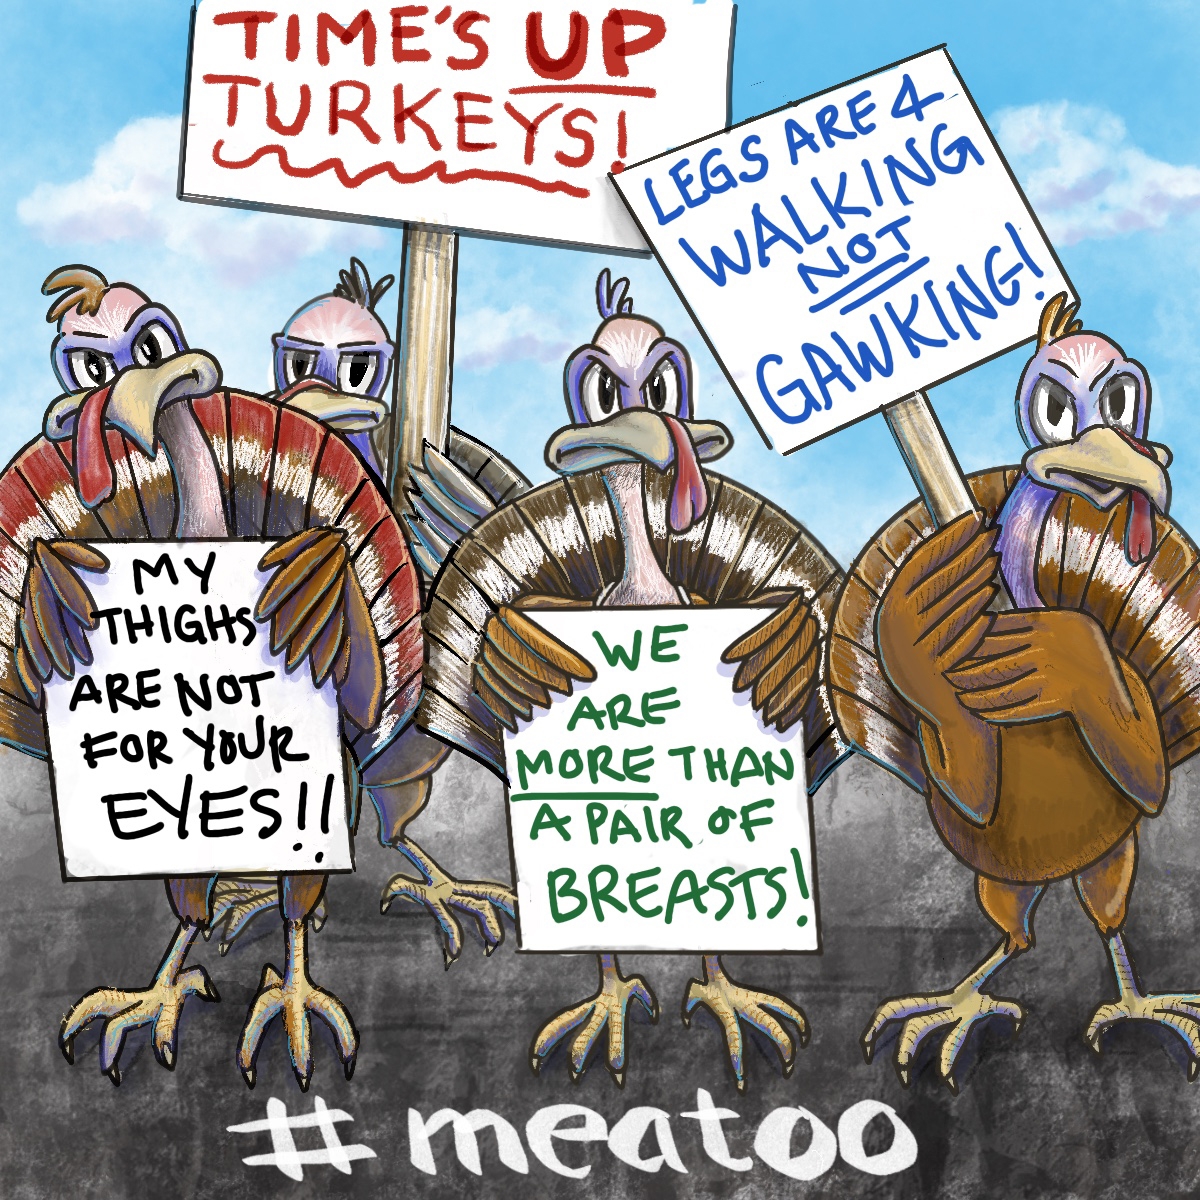 Turkeys protesting the eating of turkeys